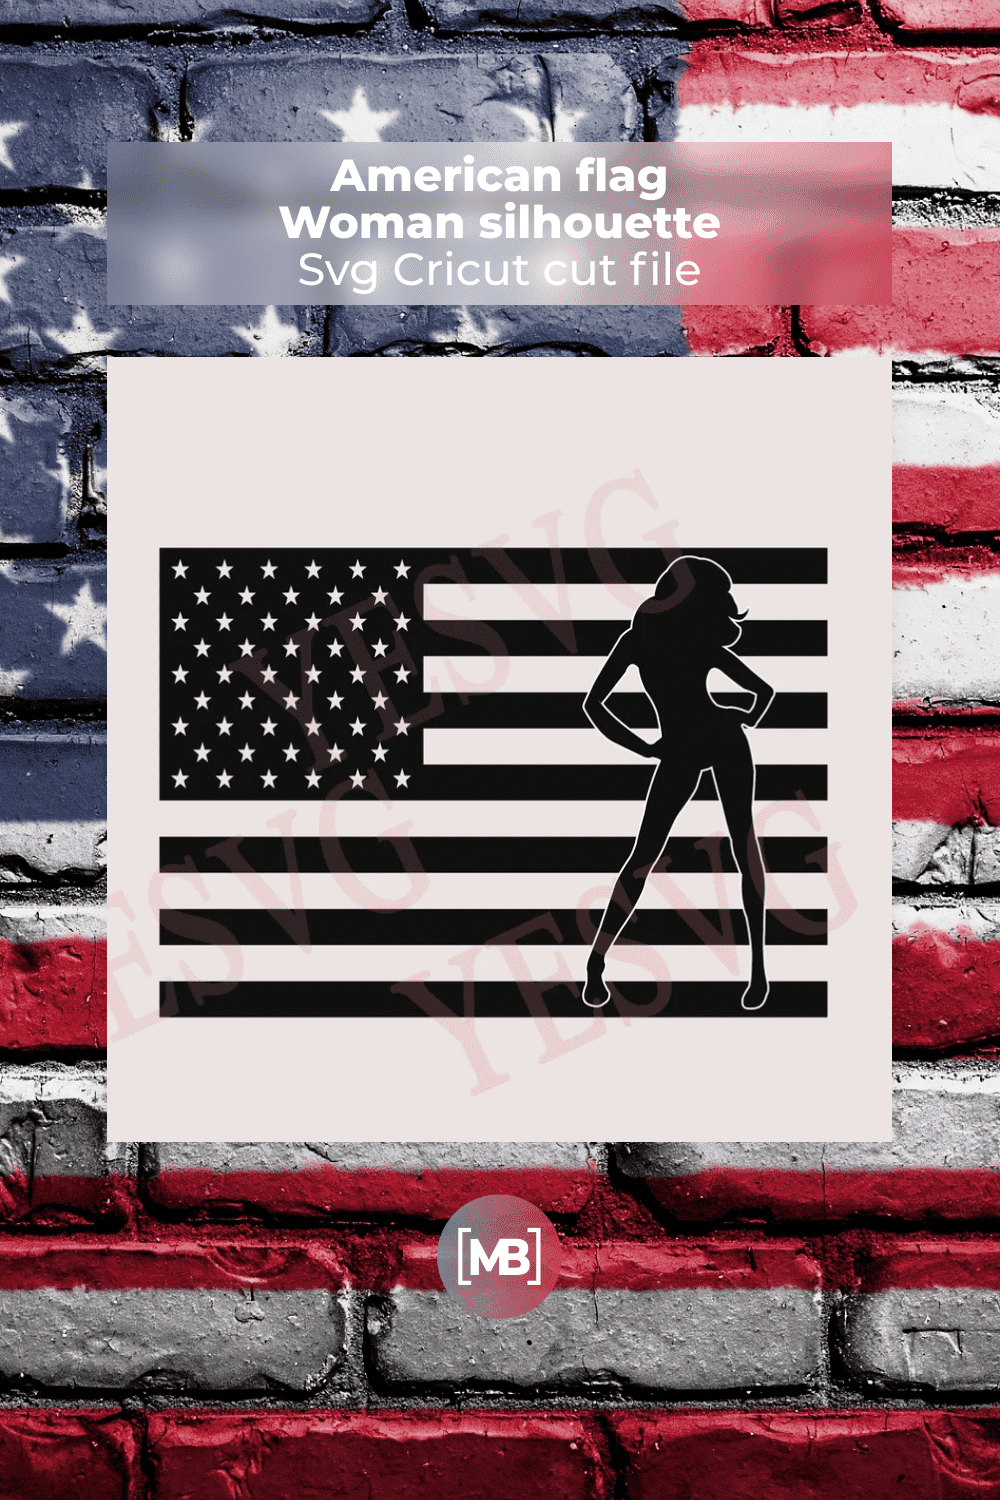 American flag Woman silhouette Svg Cricut cut file.